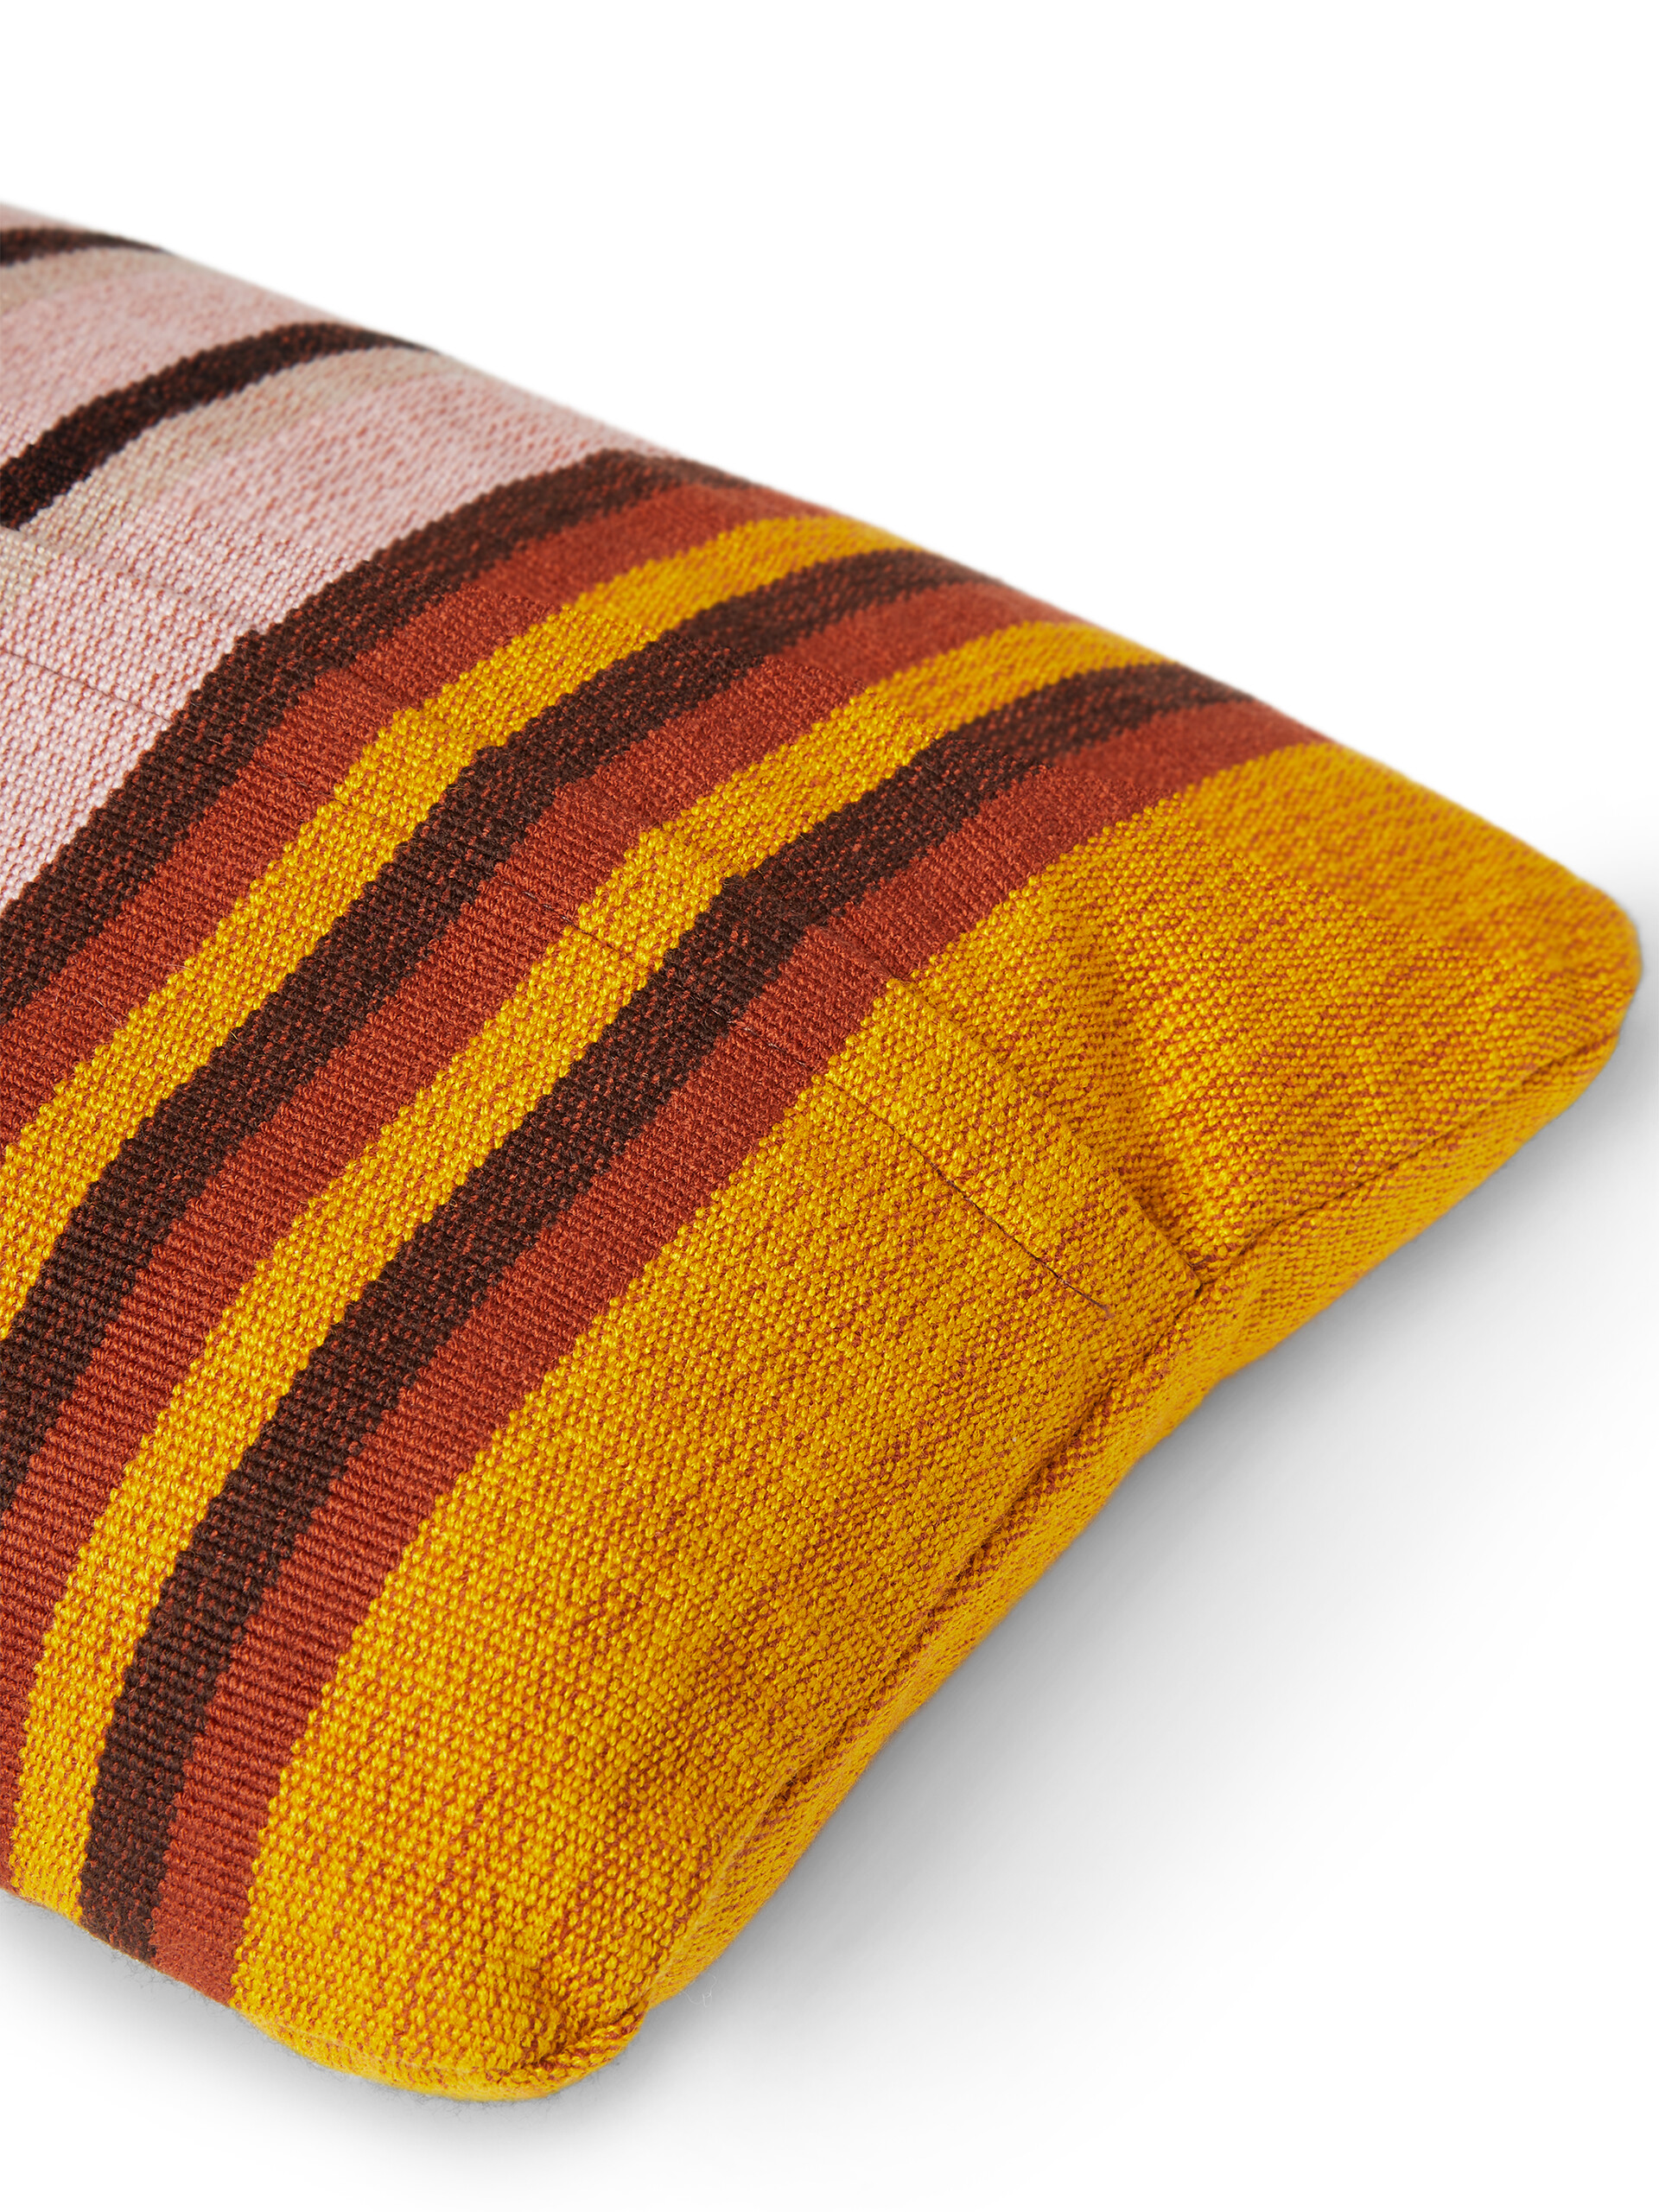 MARNI MARKET cushion in multicolor brown fabric - Furniture - Image 3